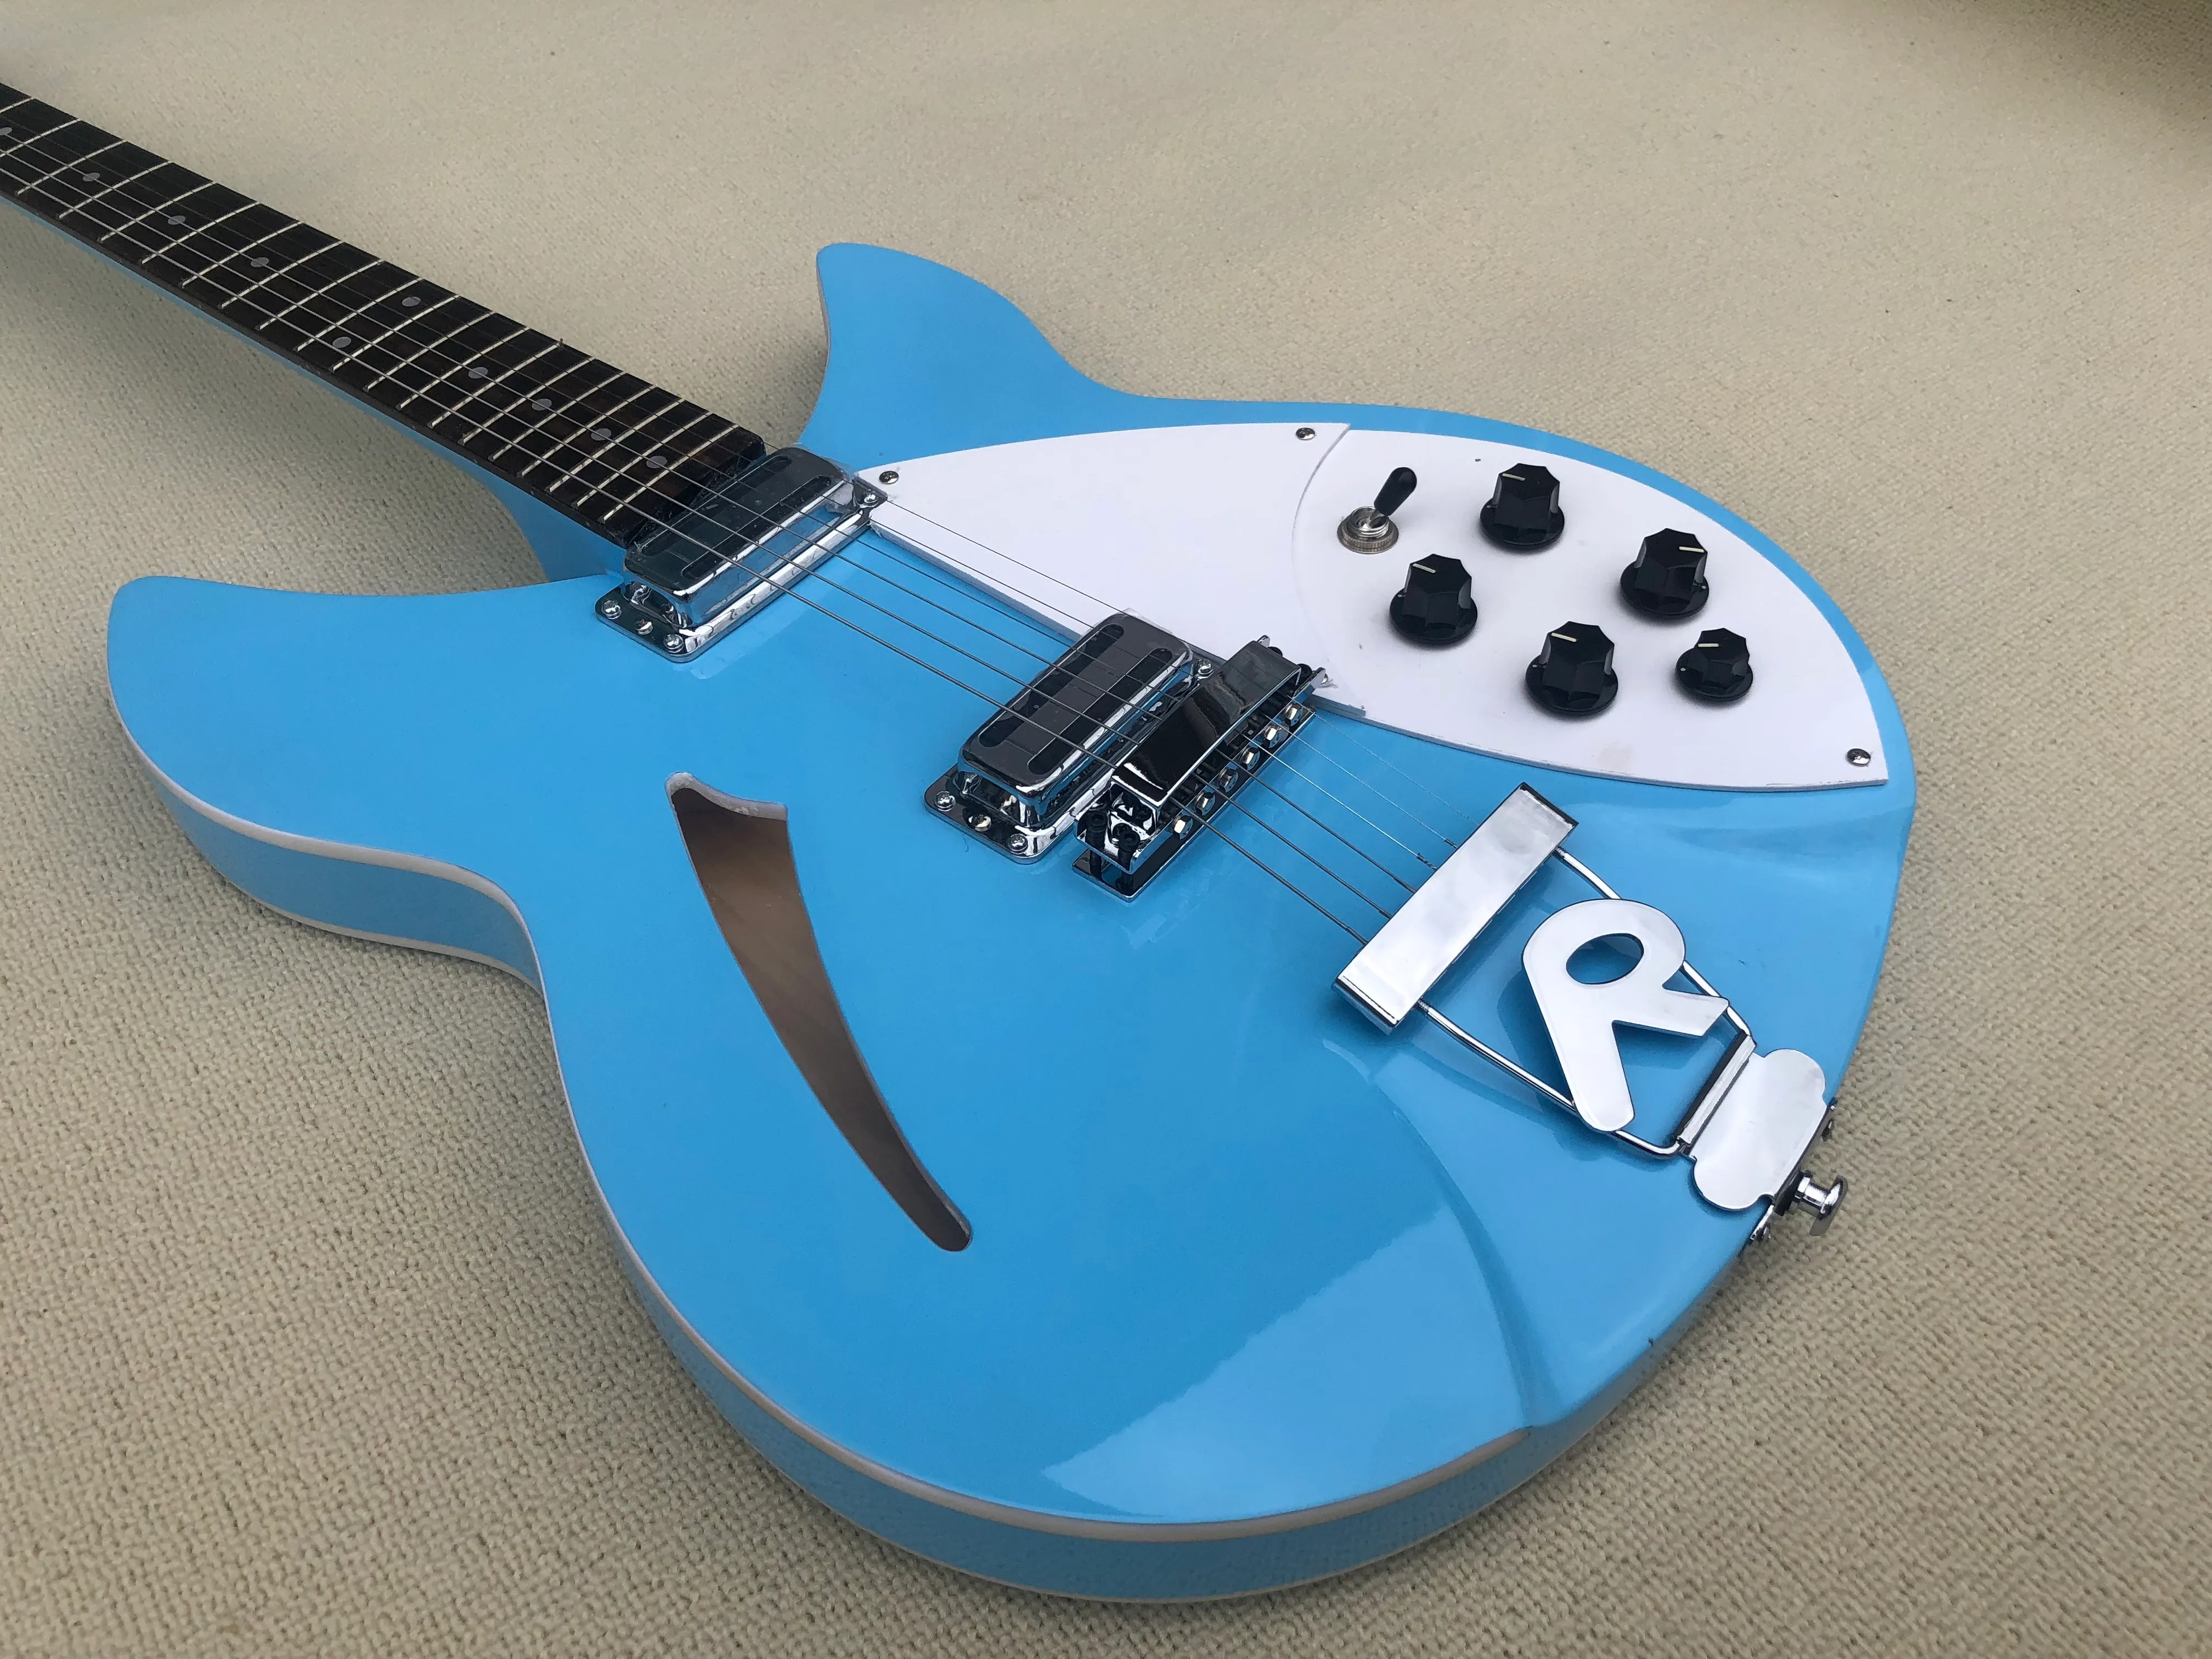 Yeni Yüksek Kaliteli 6-String F-Delik Elektro Gitar, Metal Mavi Boya, Yarım Boş Merkez, Kore Pikap Kamyon, Paket Navlun